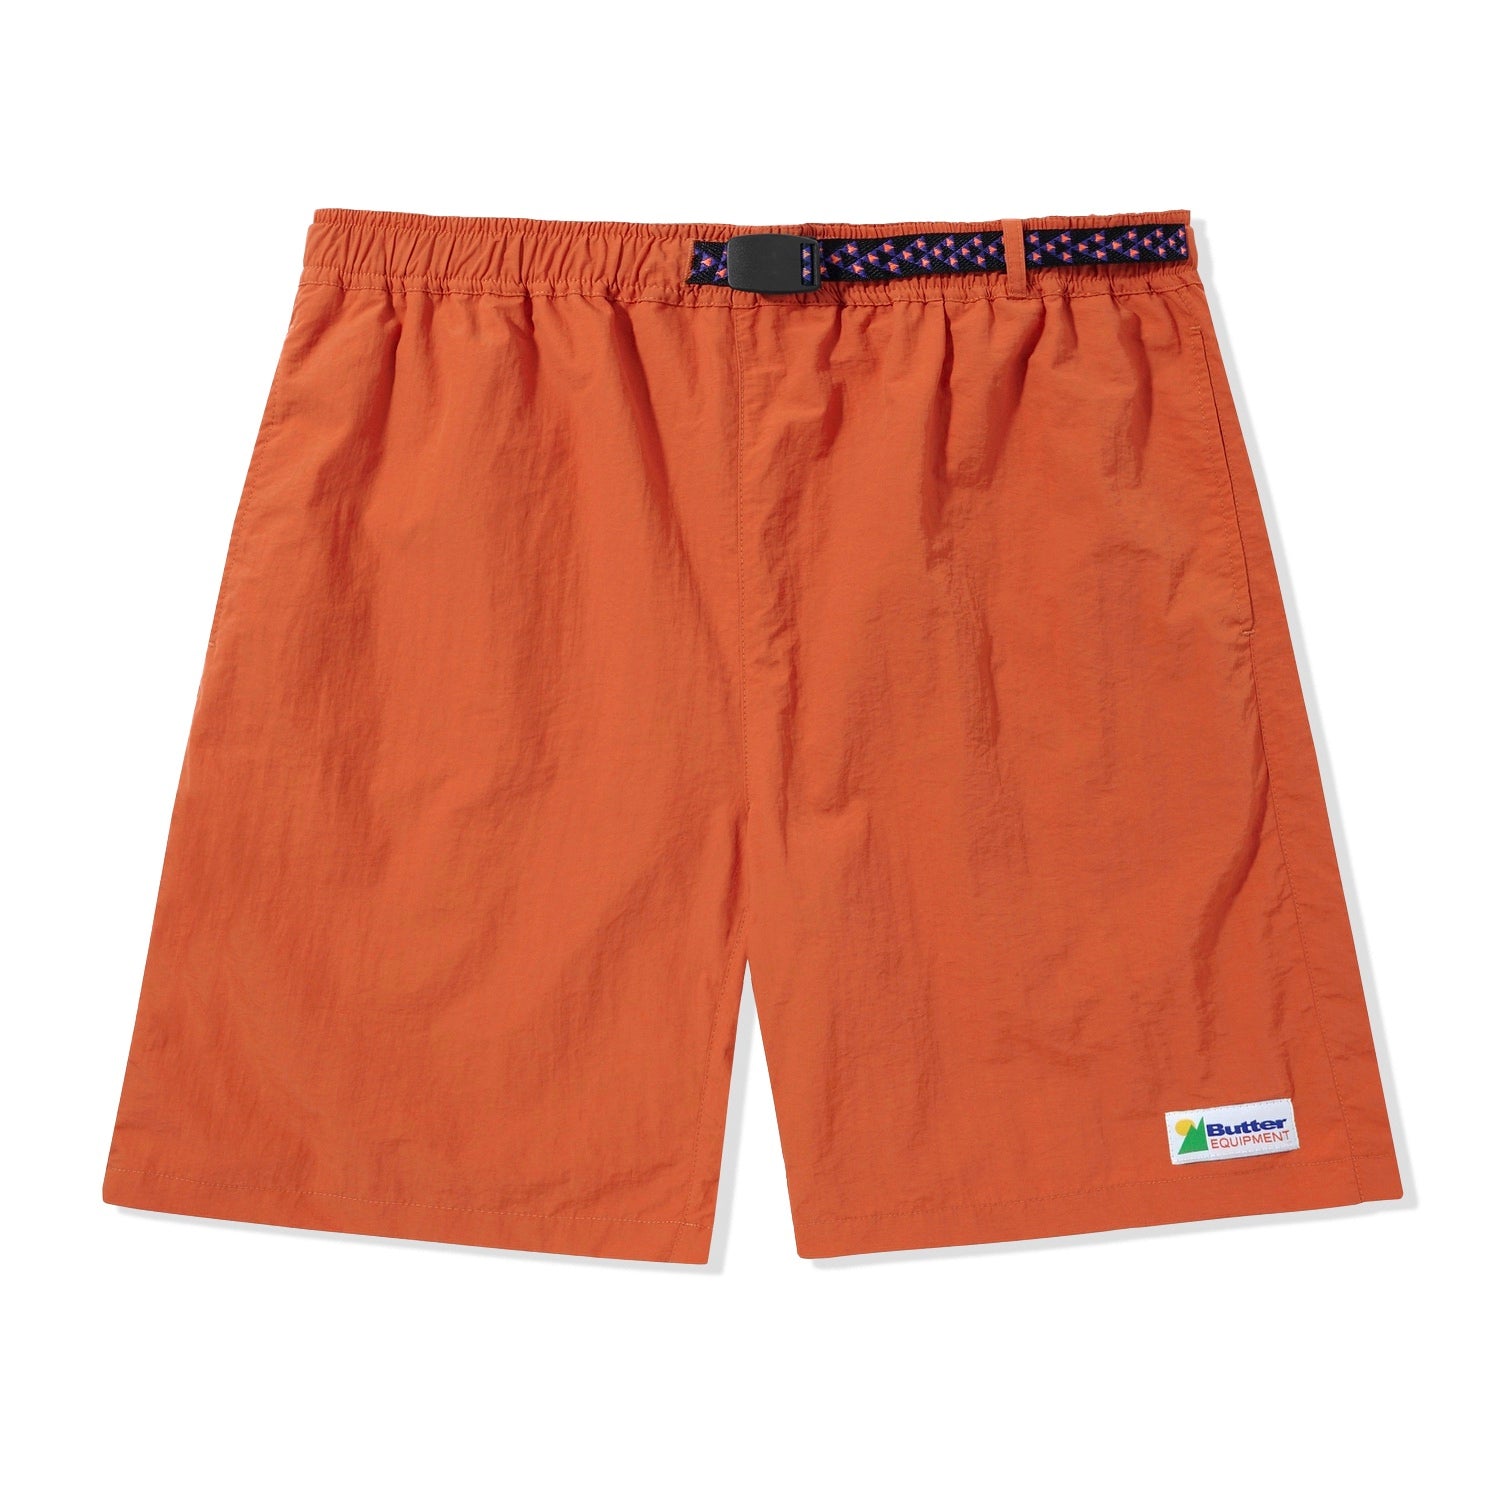 Equipment Shorts, Burnt Orange